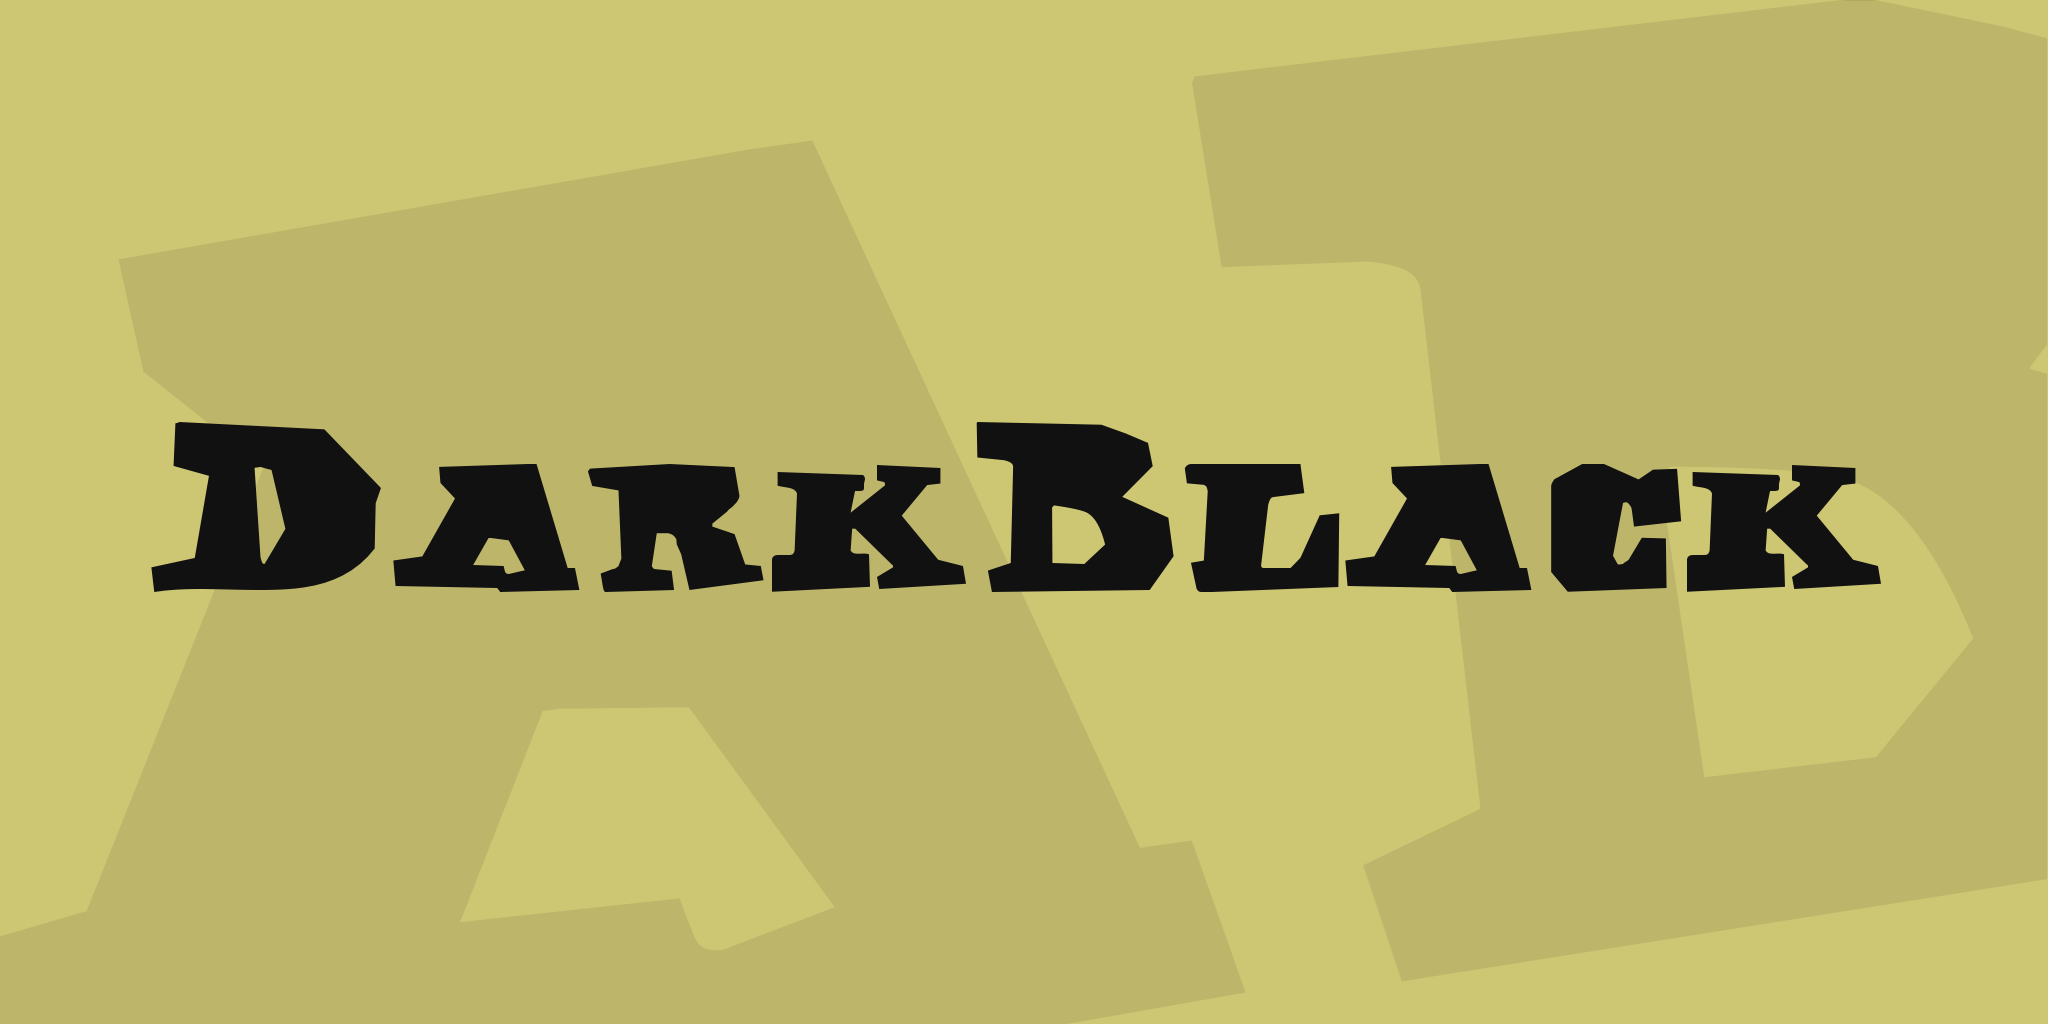 Dark Black